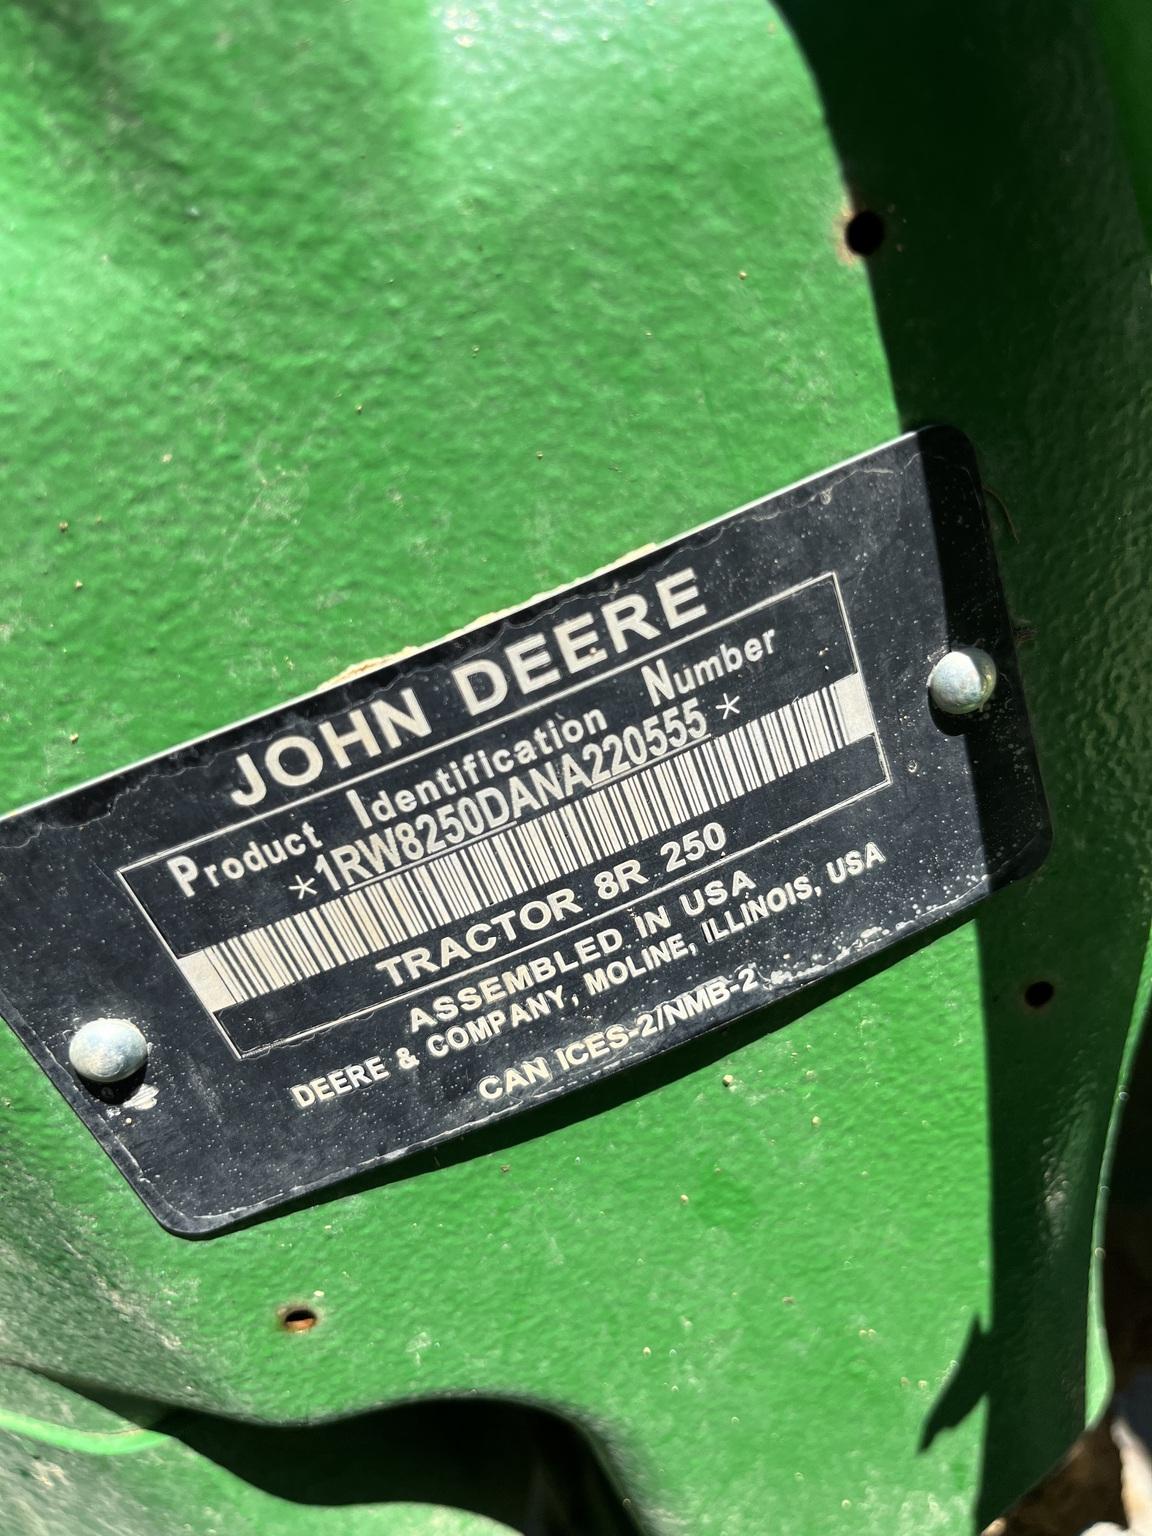 2023 John Deere 8R 250